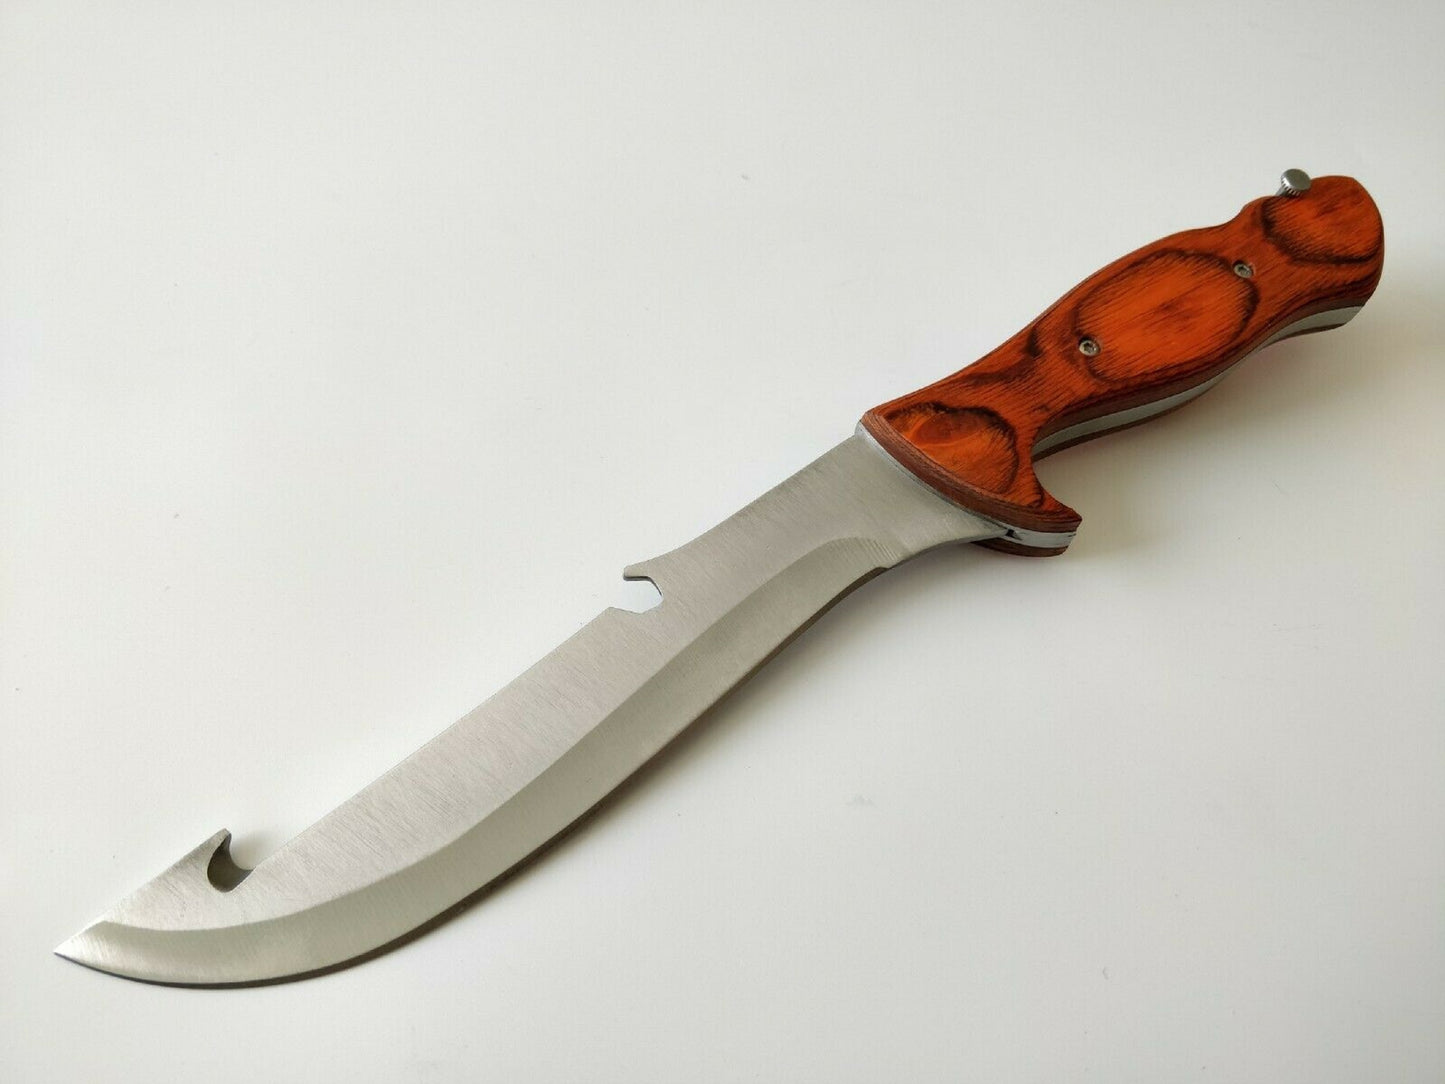 4 PIECE EXCHANGEABLE BLADE LOCKBACK UTILITY KNIFE SET